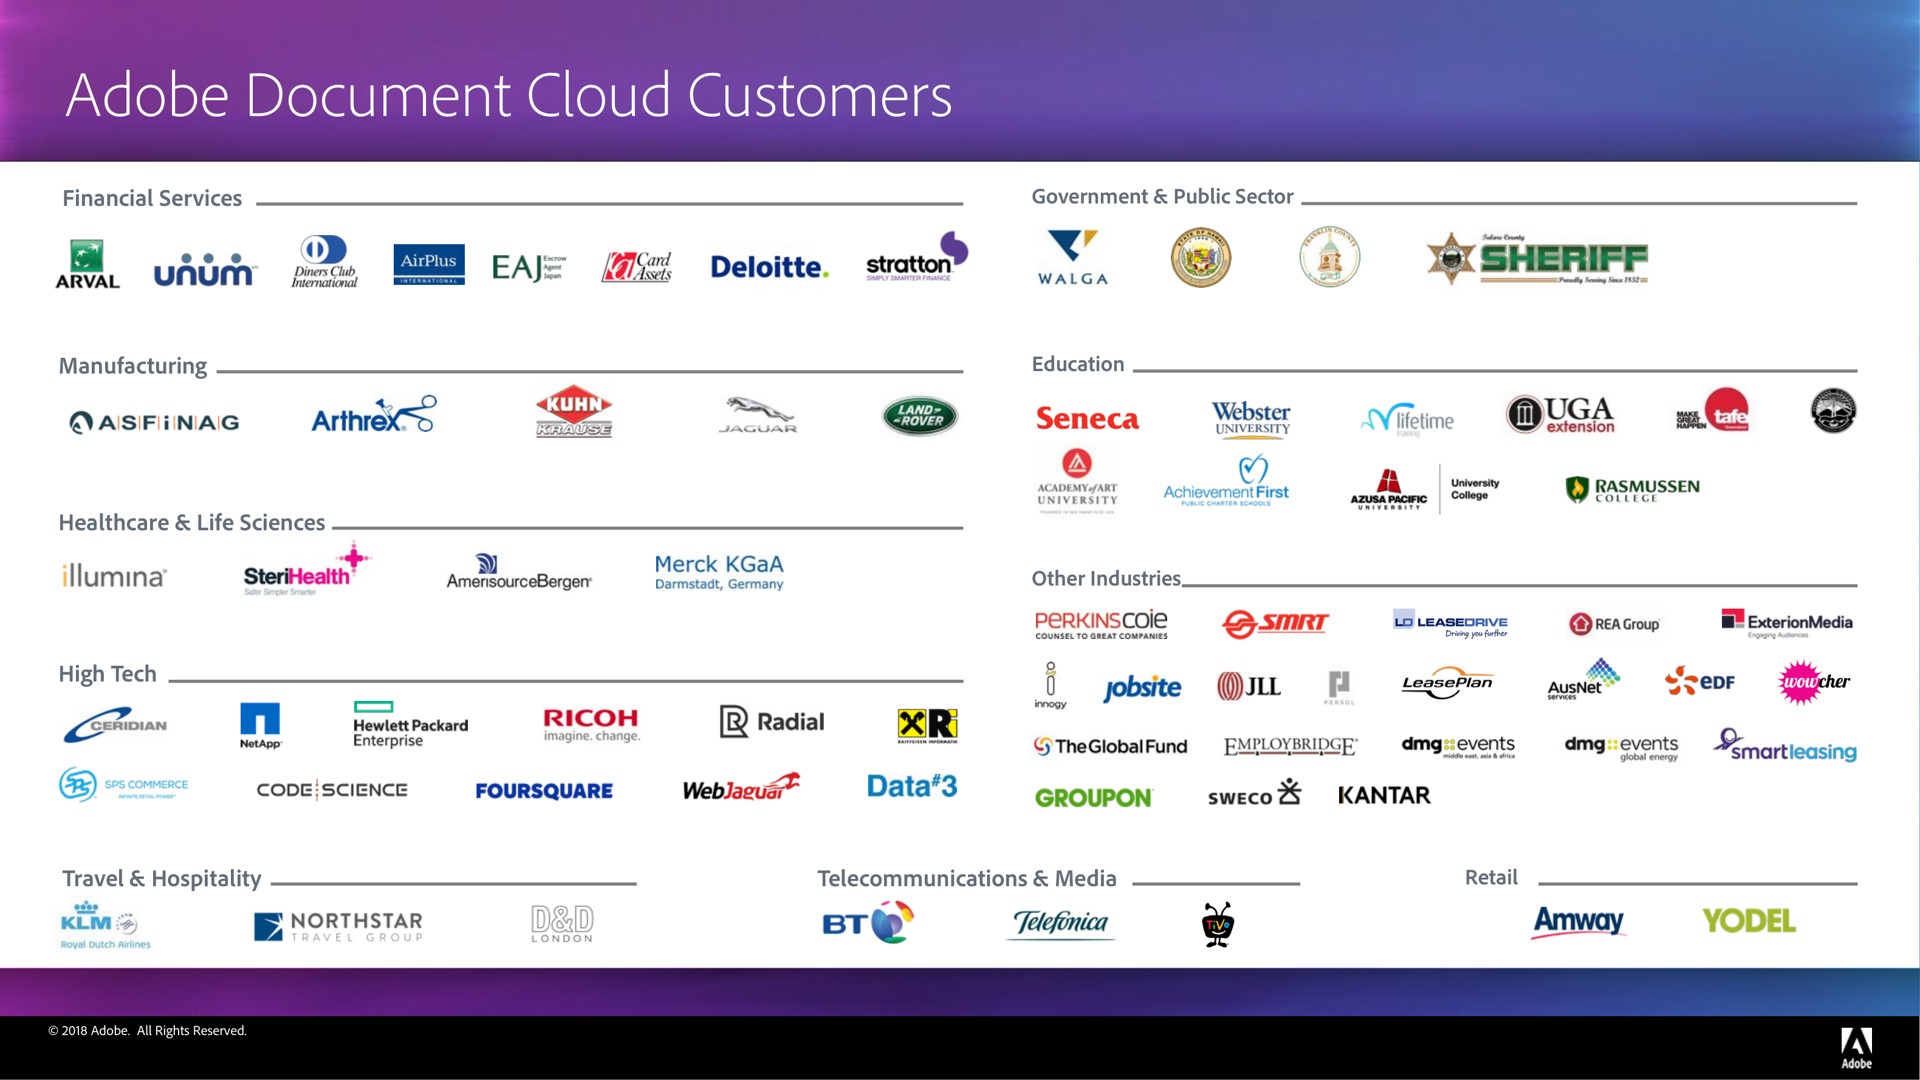 adobe document cloud customers | Adobe